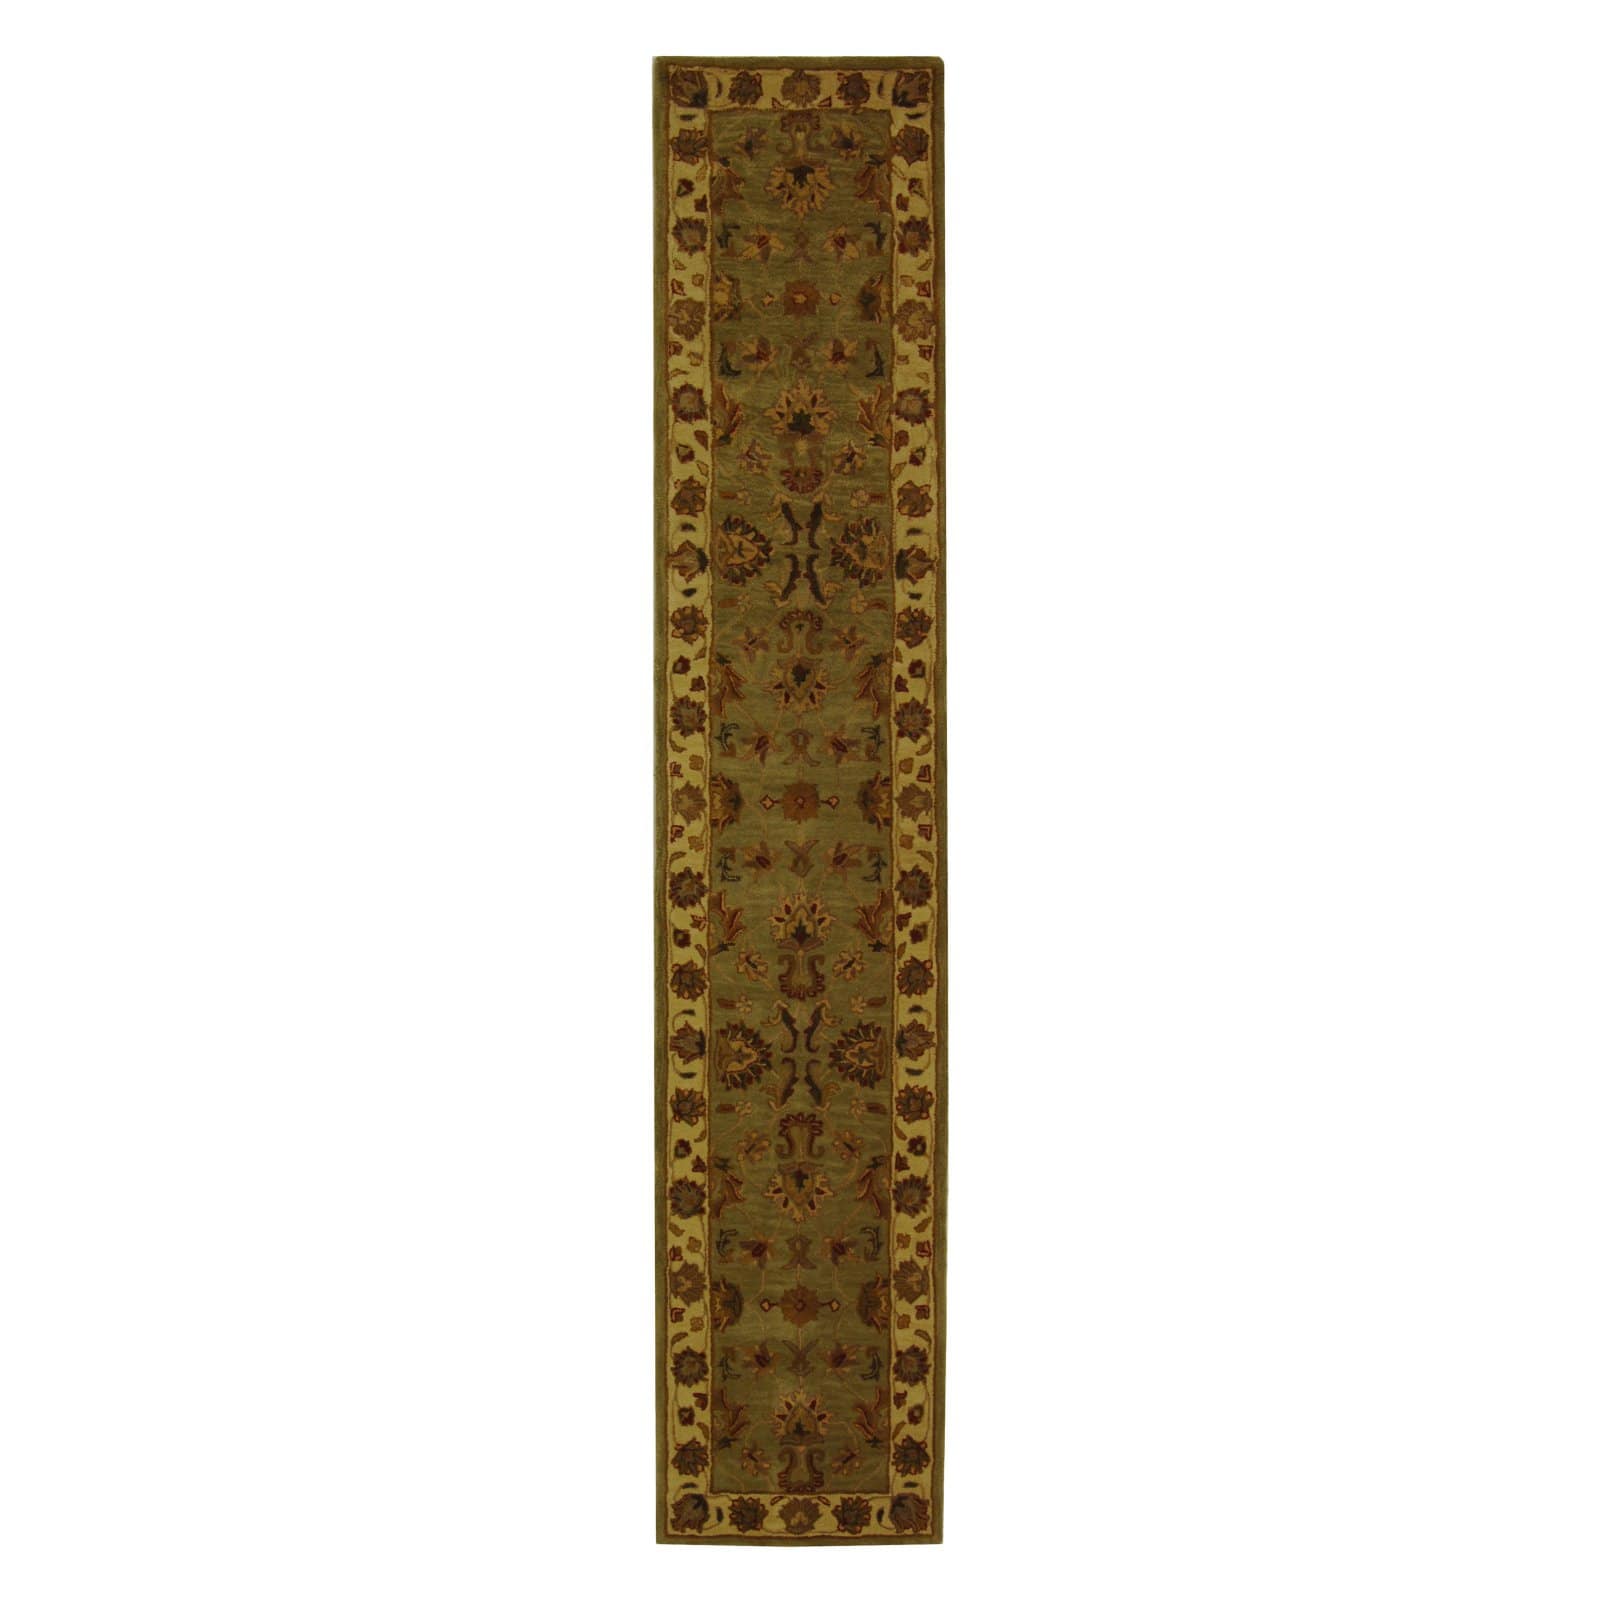 SAFAVIEH Heritage Regis Traditional Wool Area Rug, Green/Gold, 2'3" x 4' - image 3 of 10